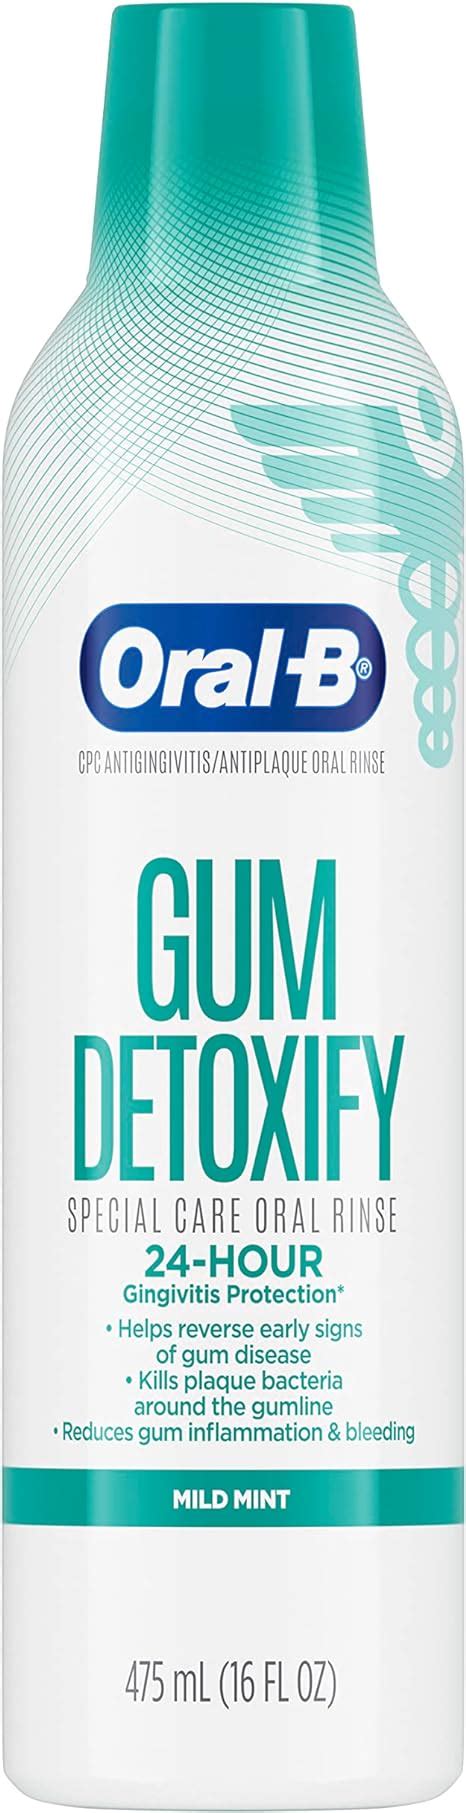 Oral B Gum Detoxify Mouthwash Special Care Oral Rinse